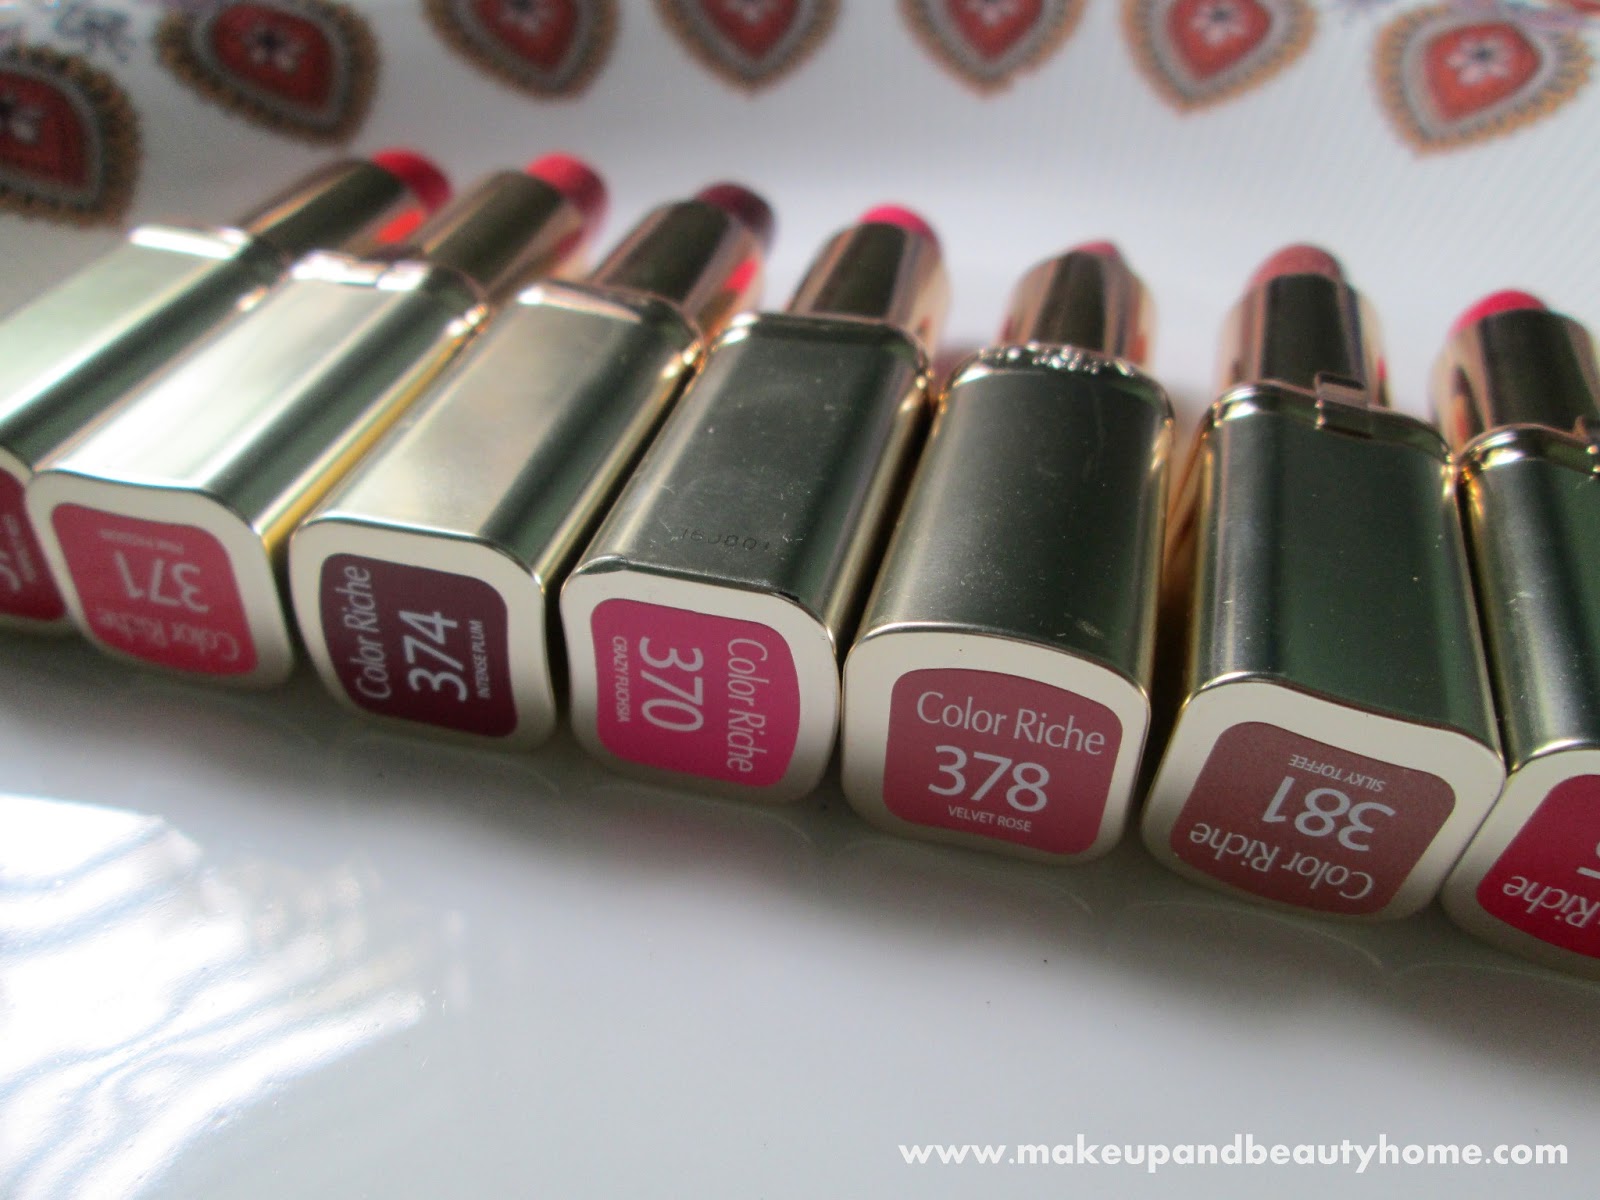 7 L’Oreal Paris Color Riche Matte Mania Lipsticks Swatches and Photos.